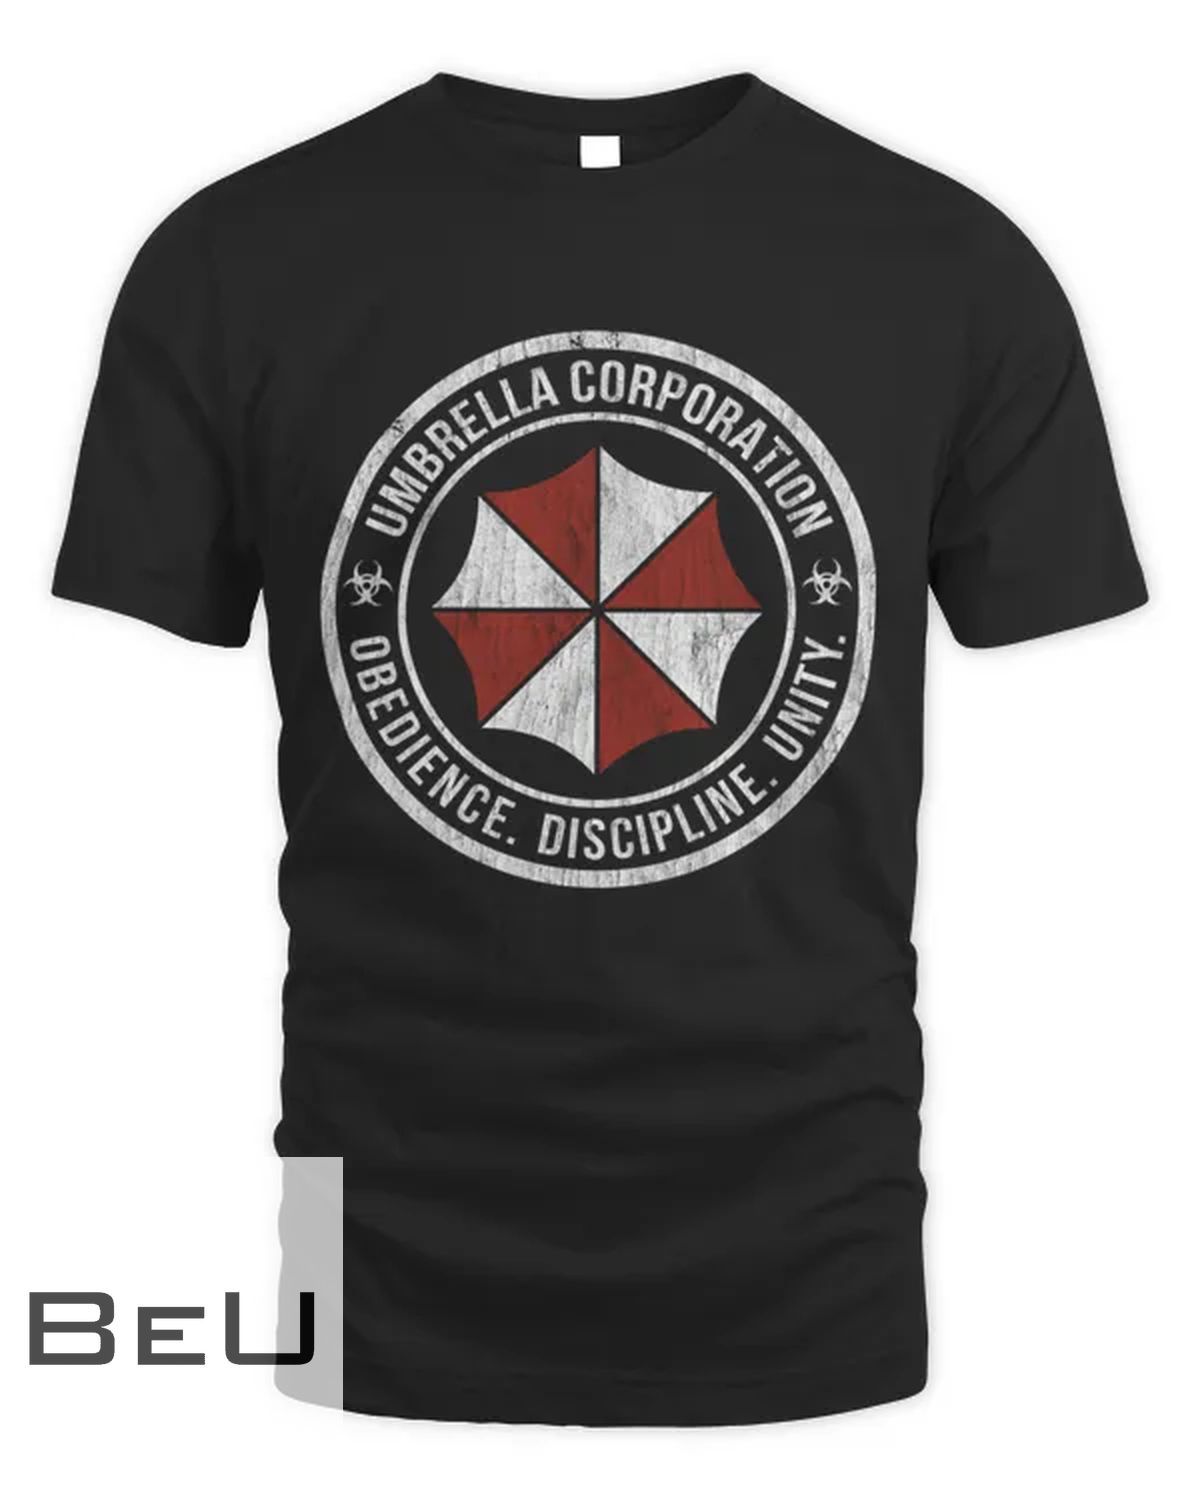 Umbrella Corporation Odu Unity Discipline Obedience  Hh220517052 T-shirt